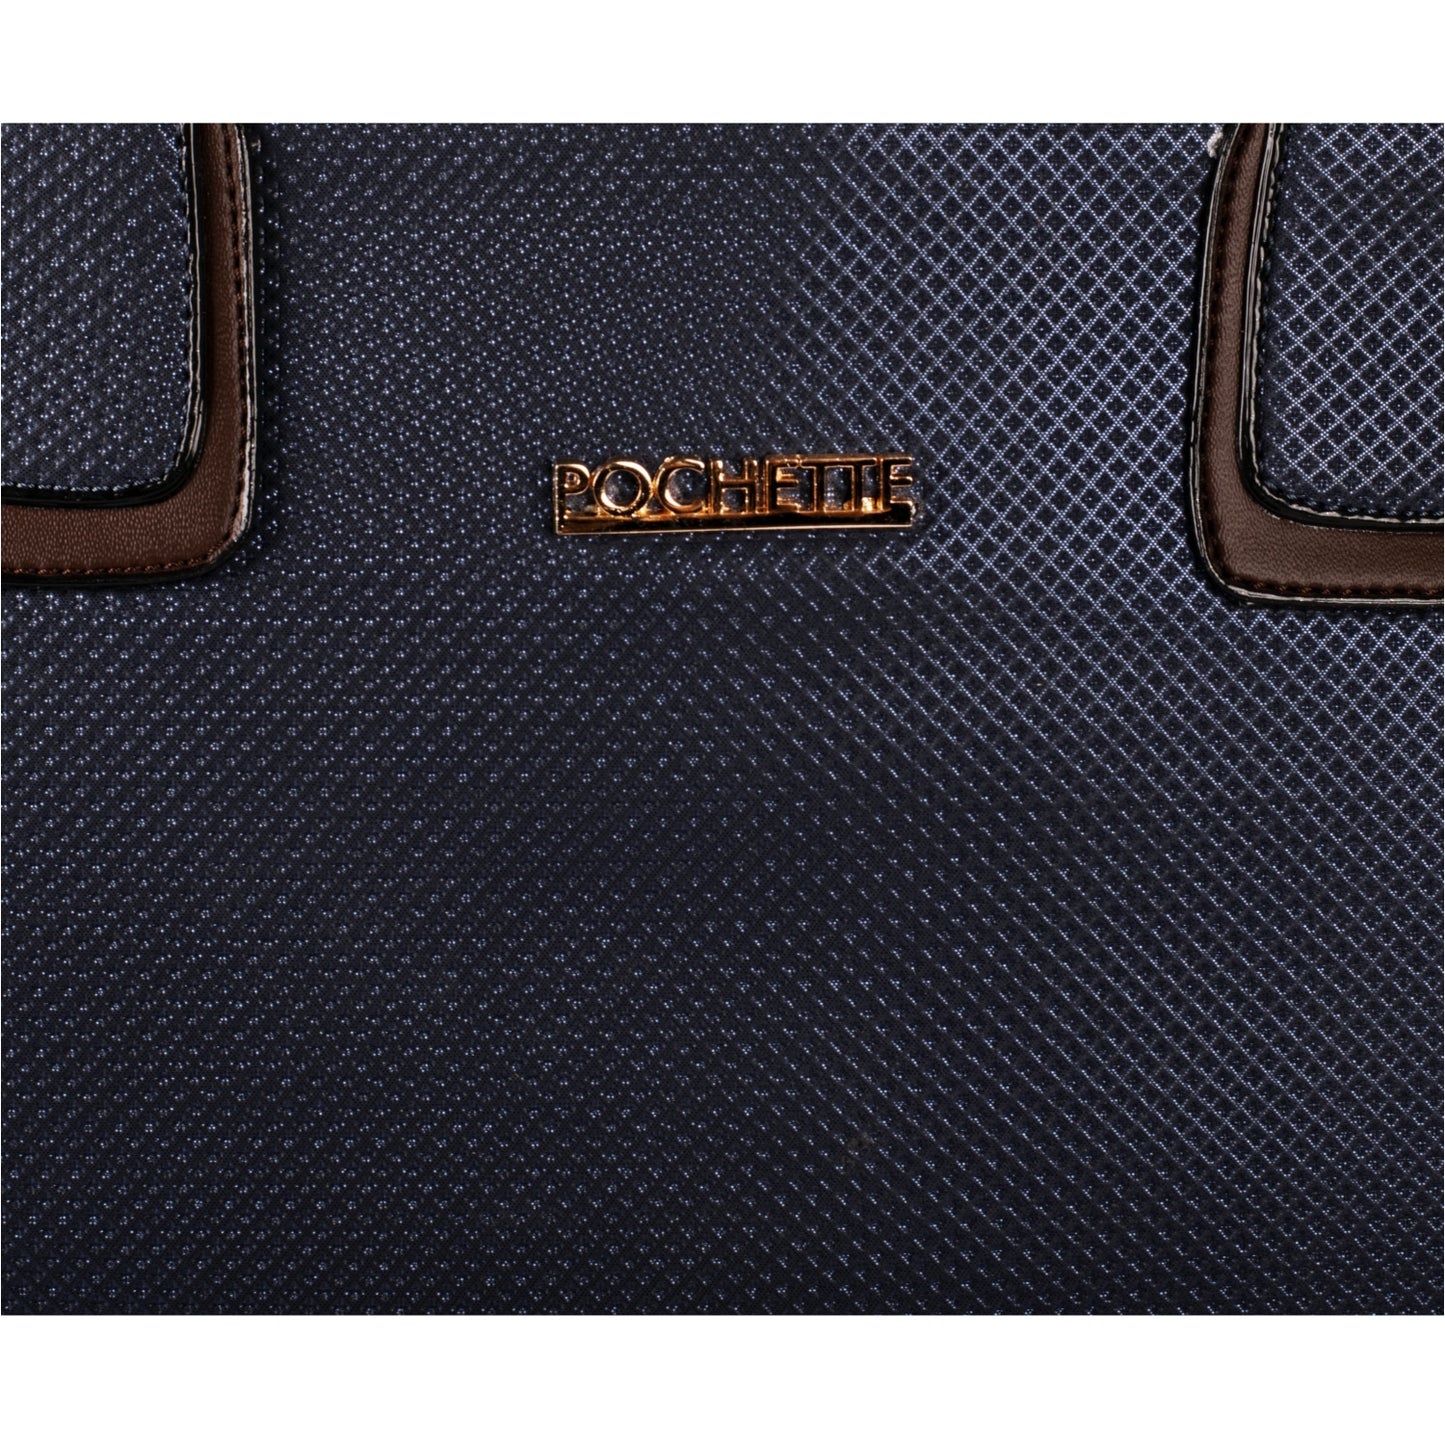 Pochette Chain Handle Handbag(Blue) - HANDBAGS